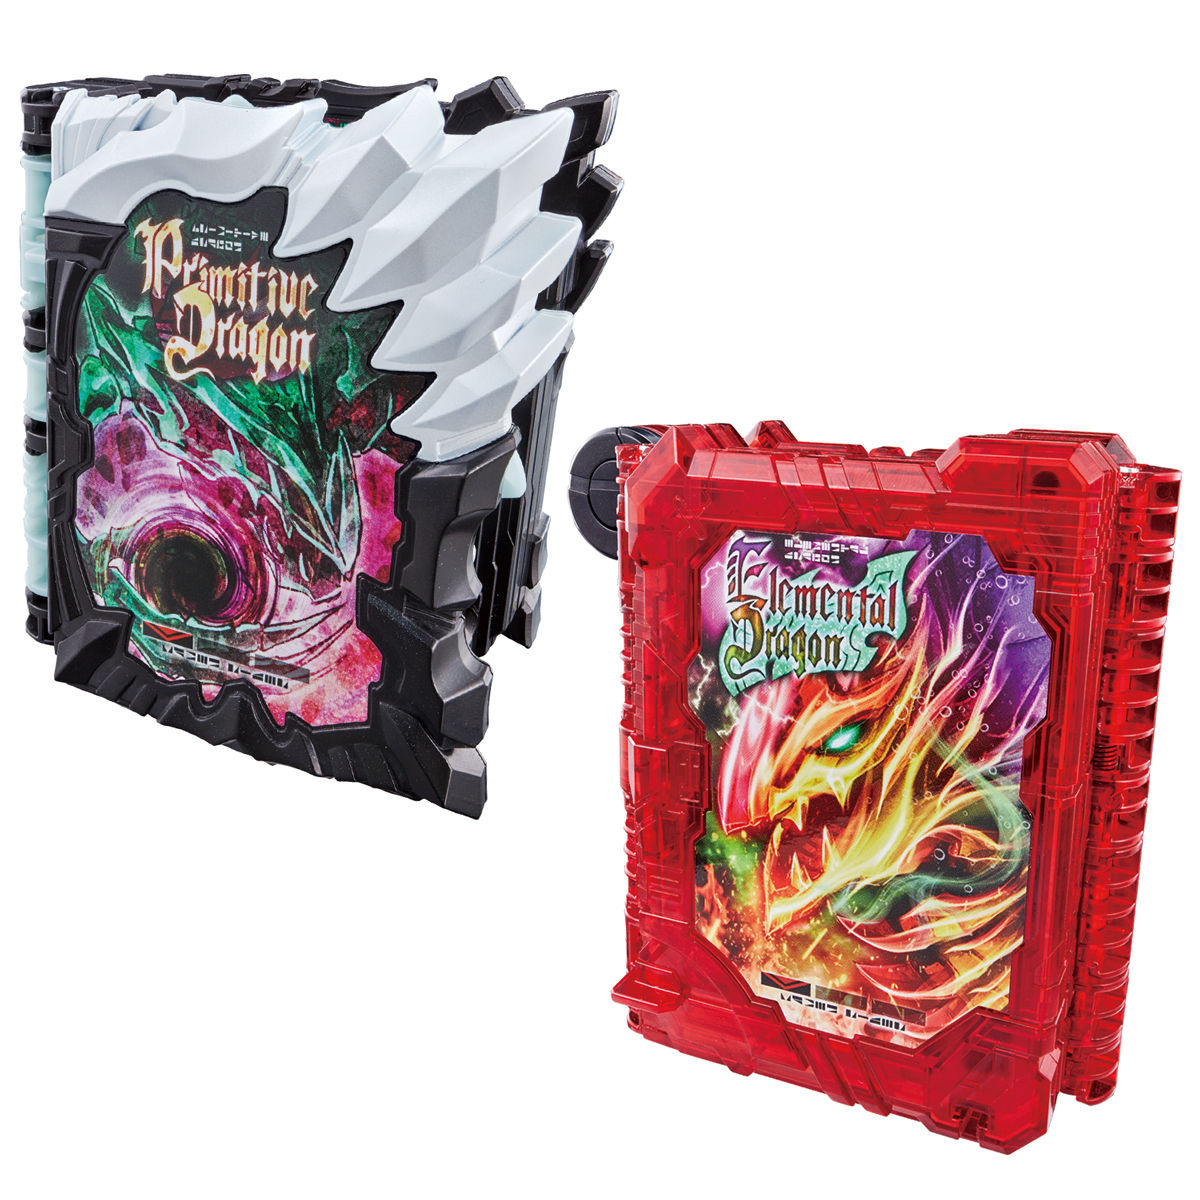 DX Primitive & Elemental Dragon Wonder Ride Book Set